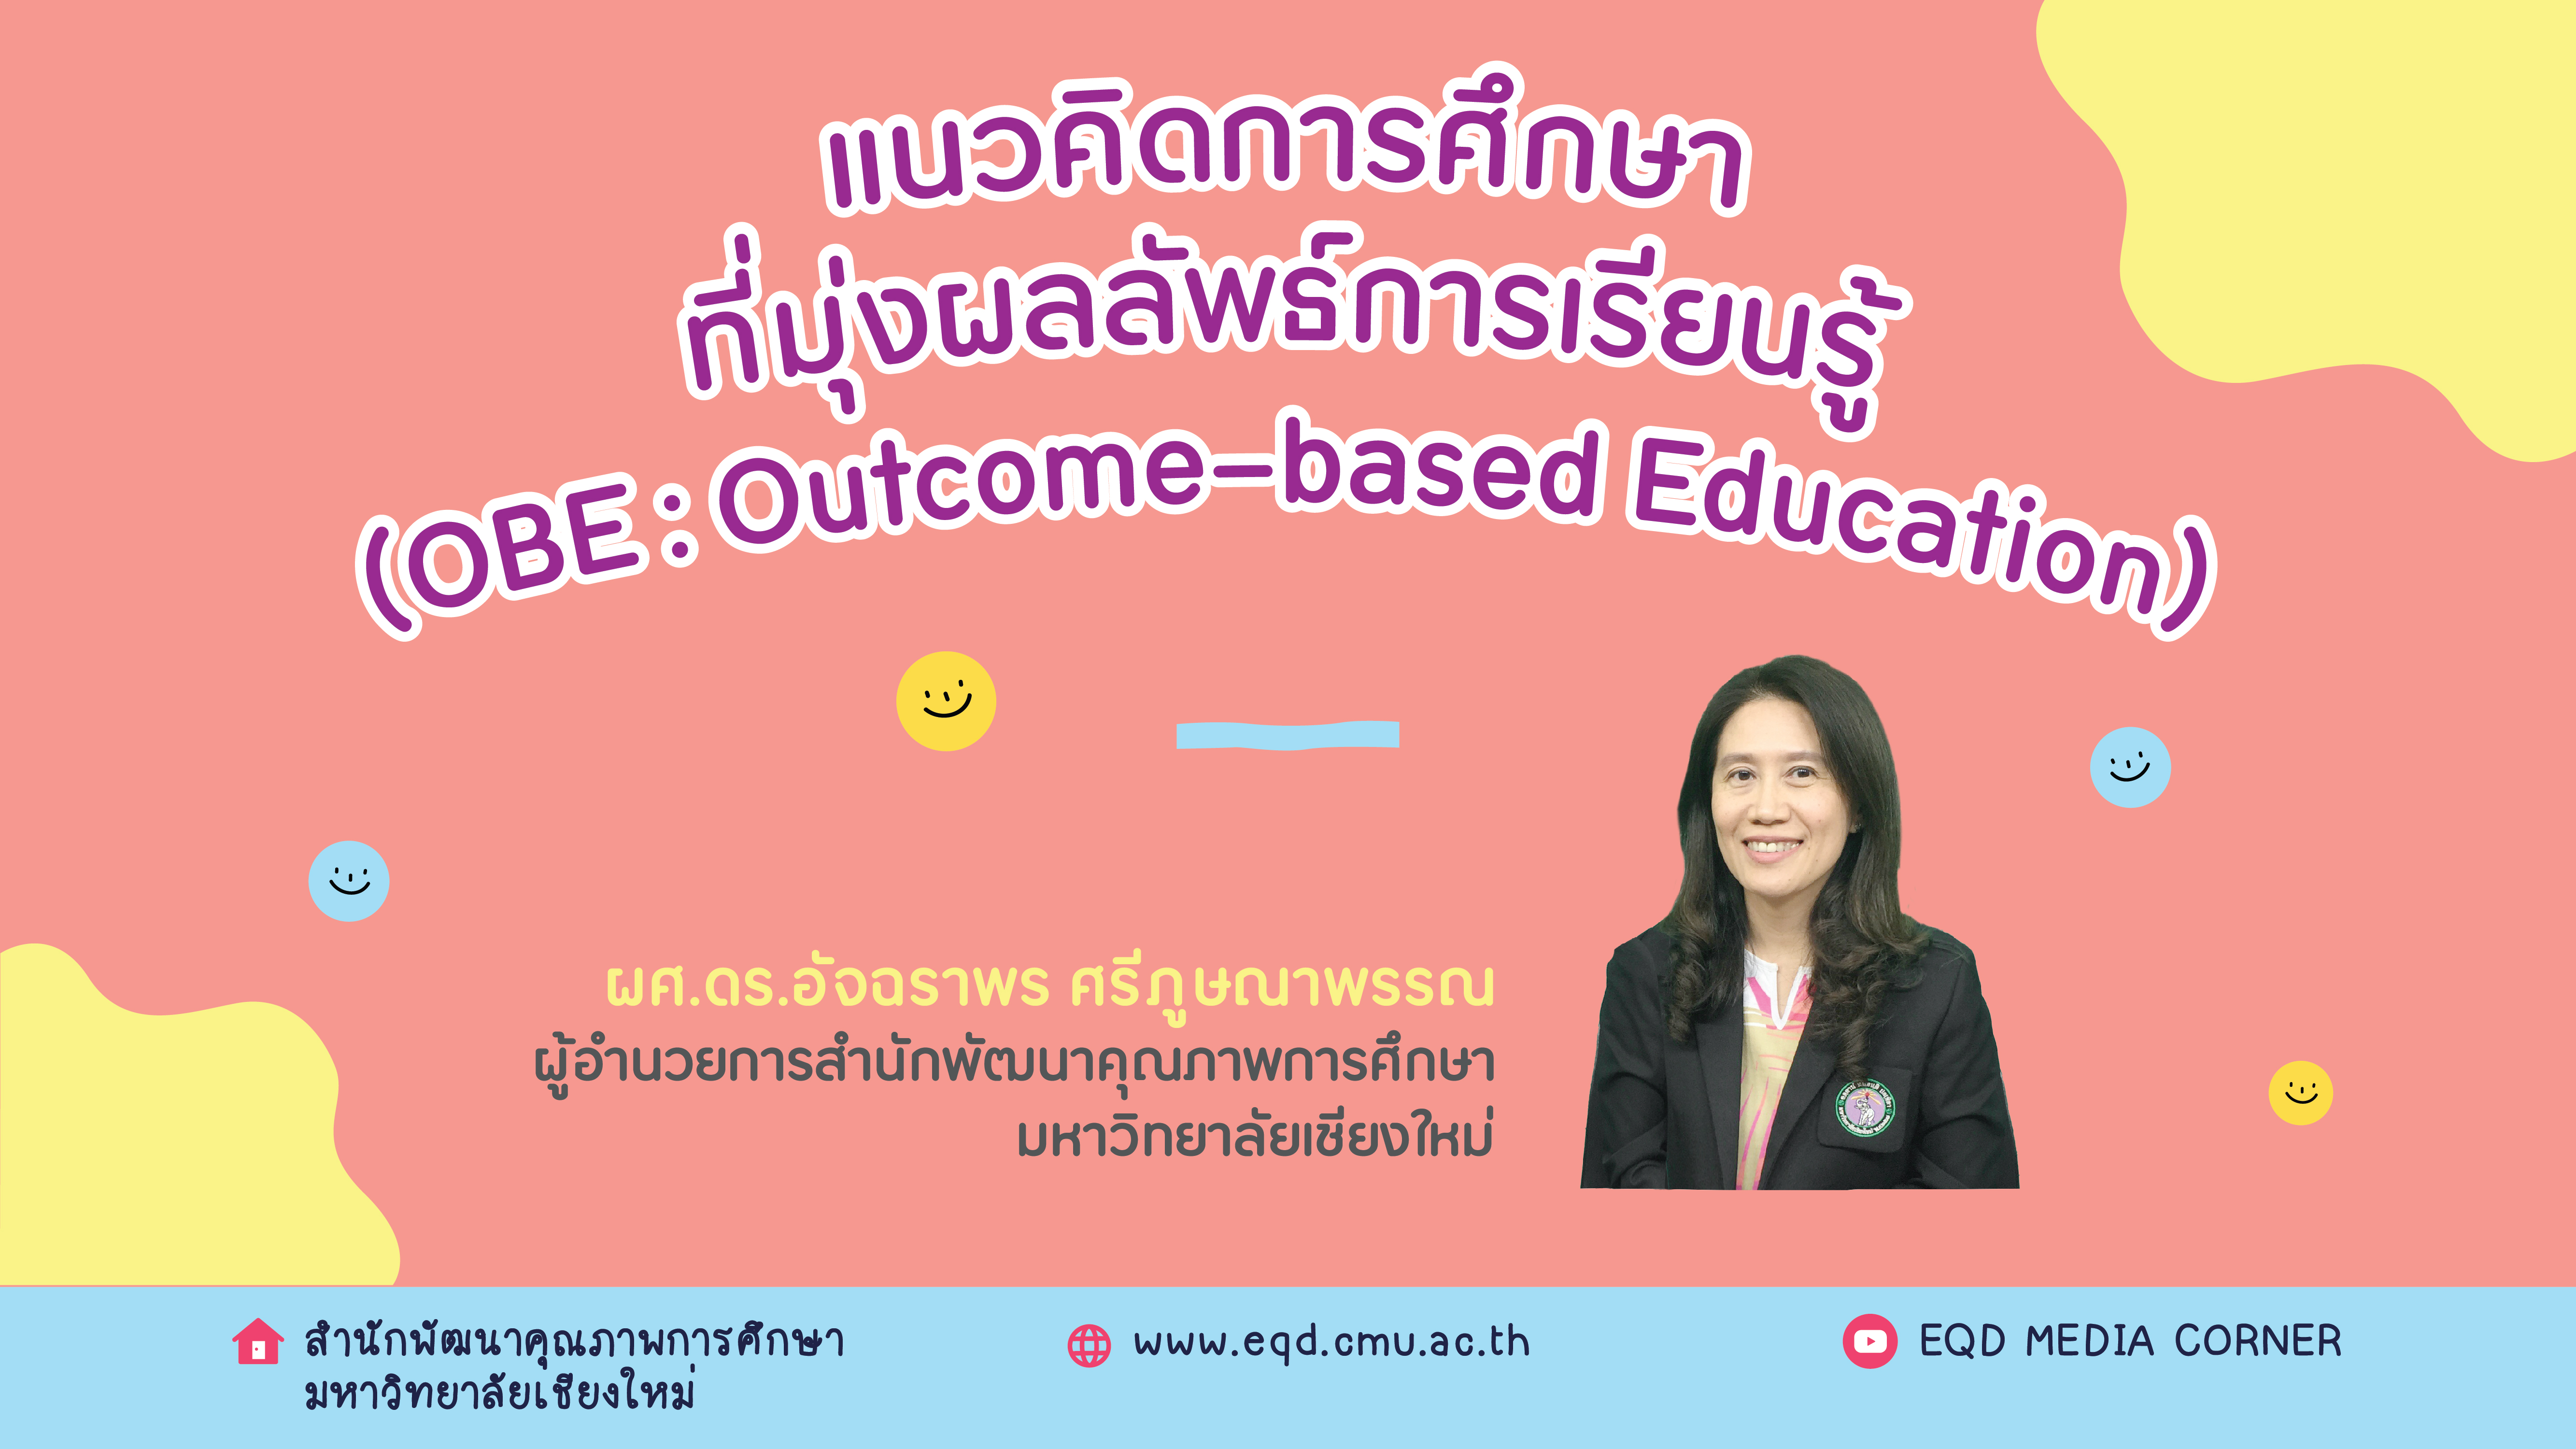 Outcome based Education